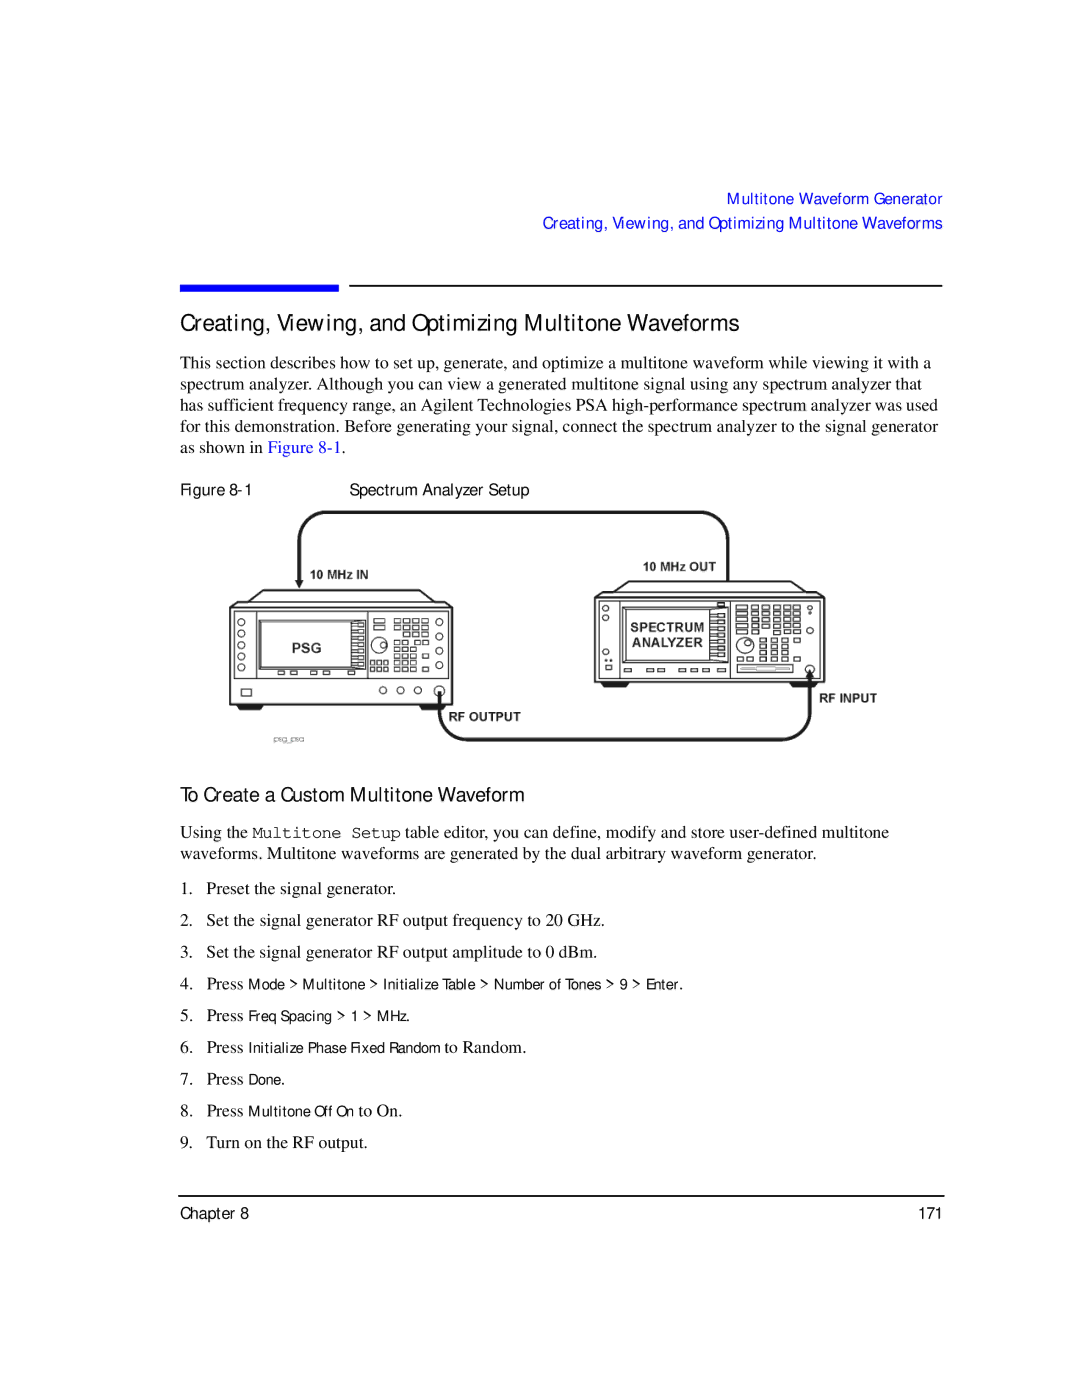 Agilent Technologies E8247C PSG CW, E8267C PSG, E8257C PSG manual Creating, Viewing, and Optimizing Multitone Waveforms 